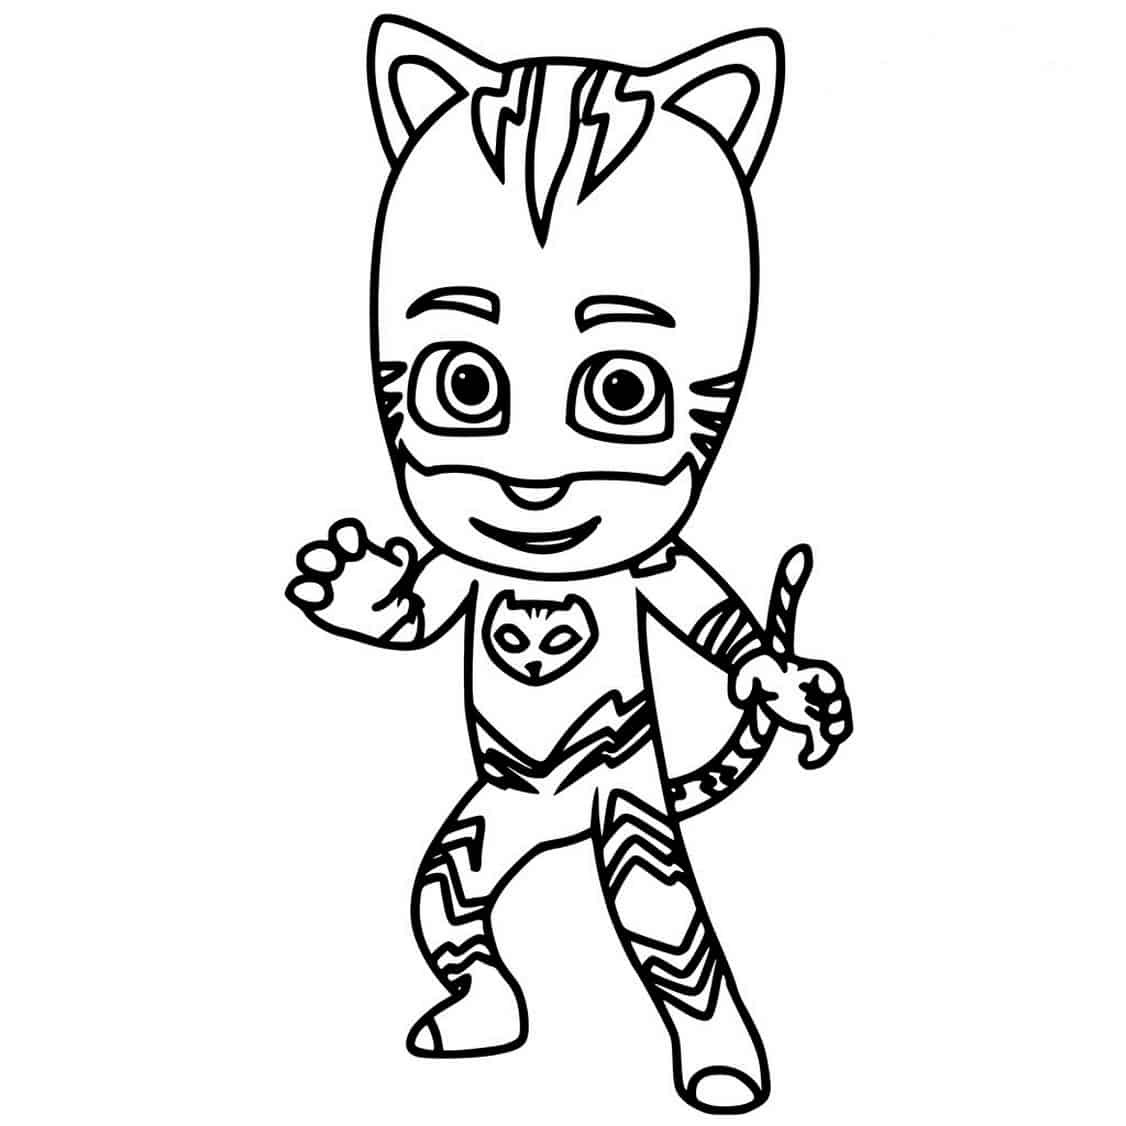 Cat Boy Coloring Pages
 PJ Masks Catboy Coloring Page